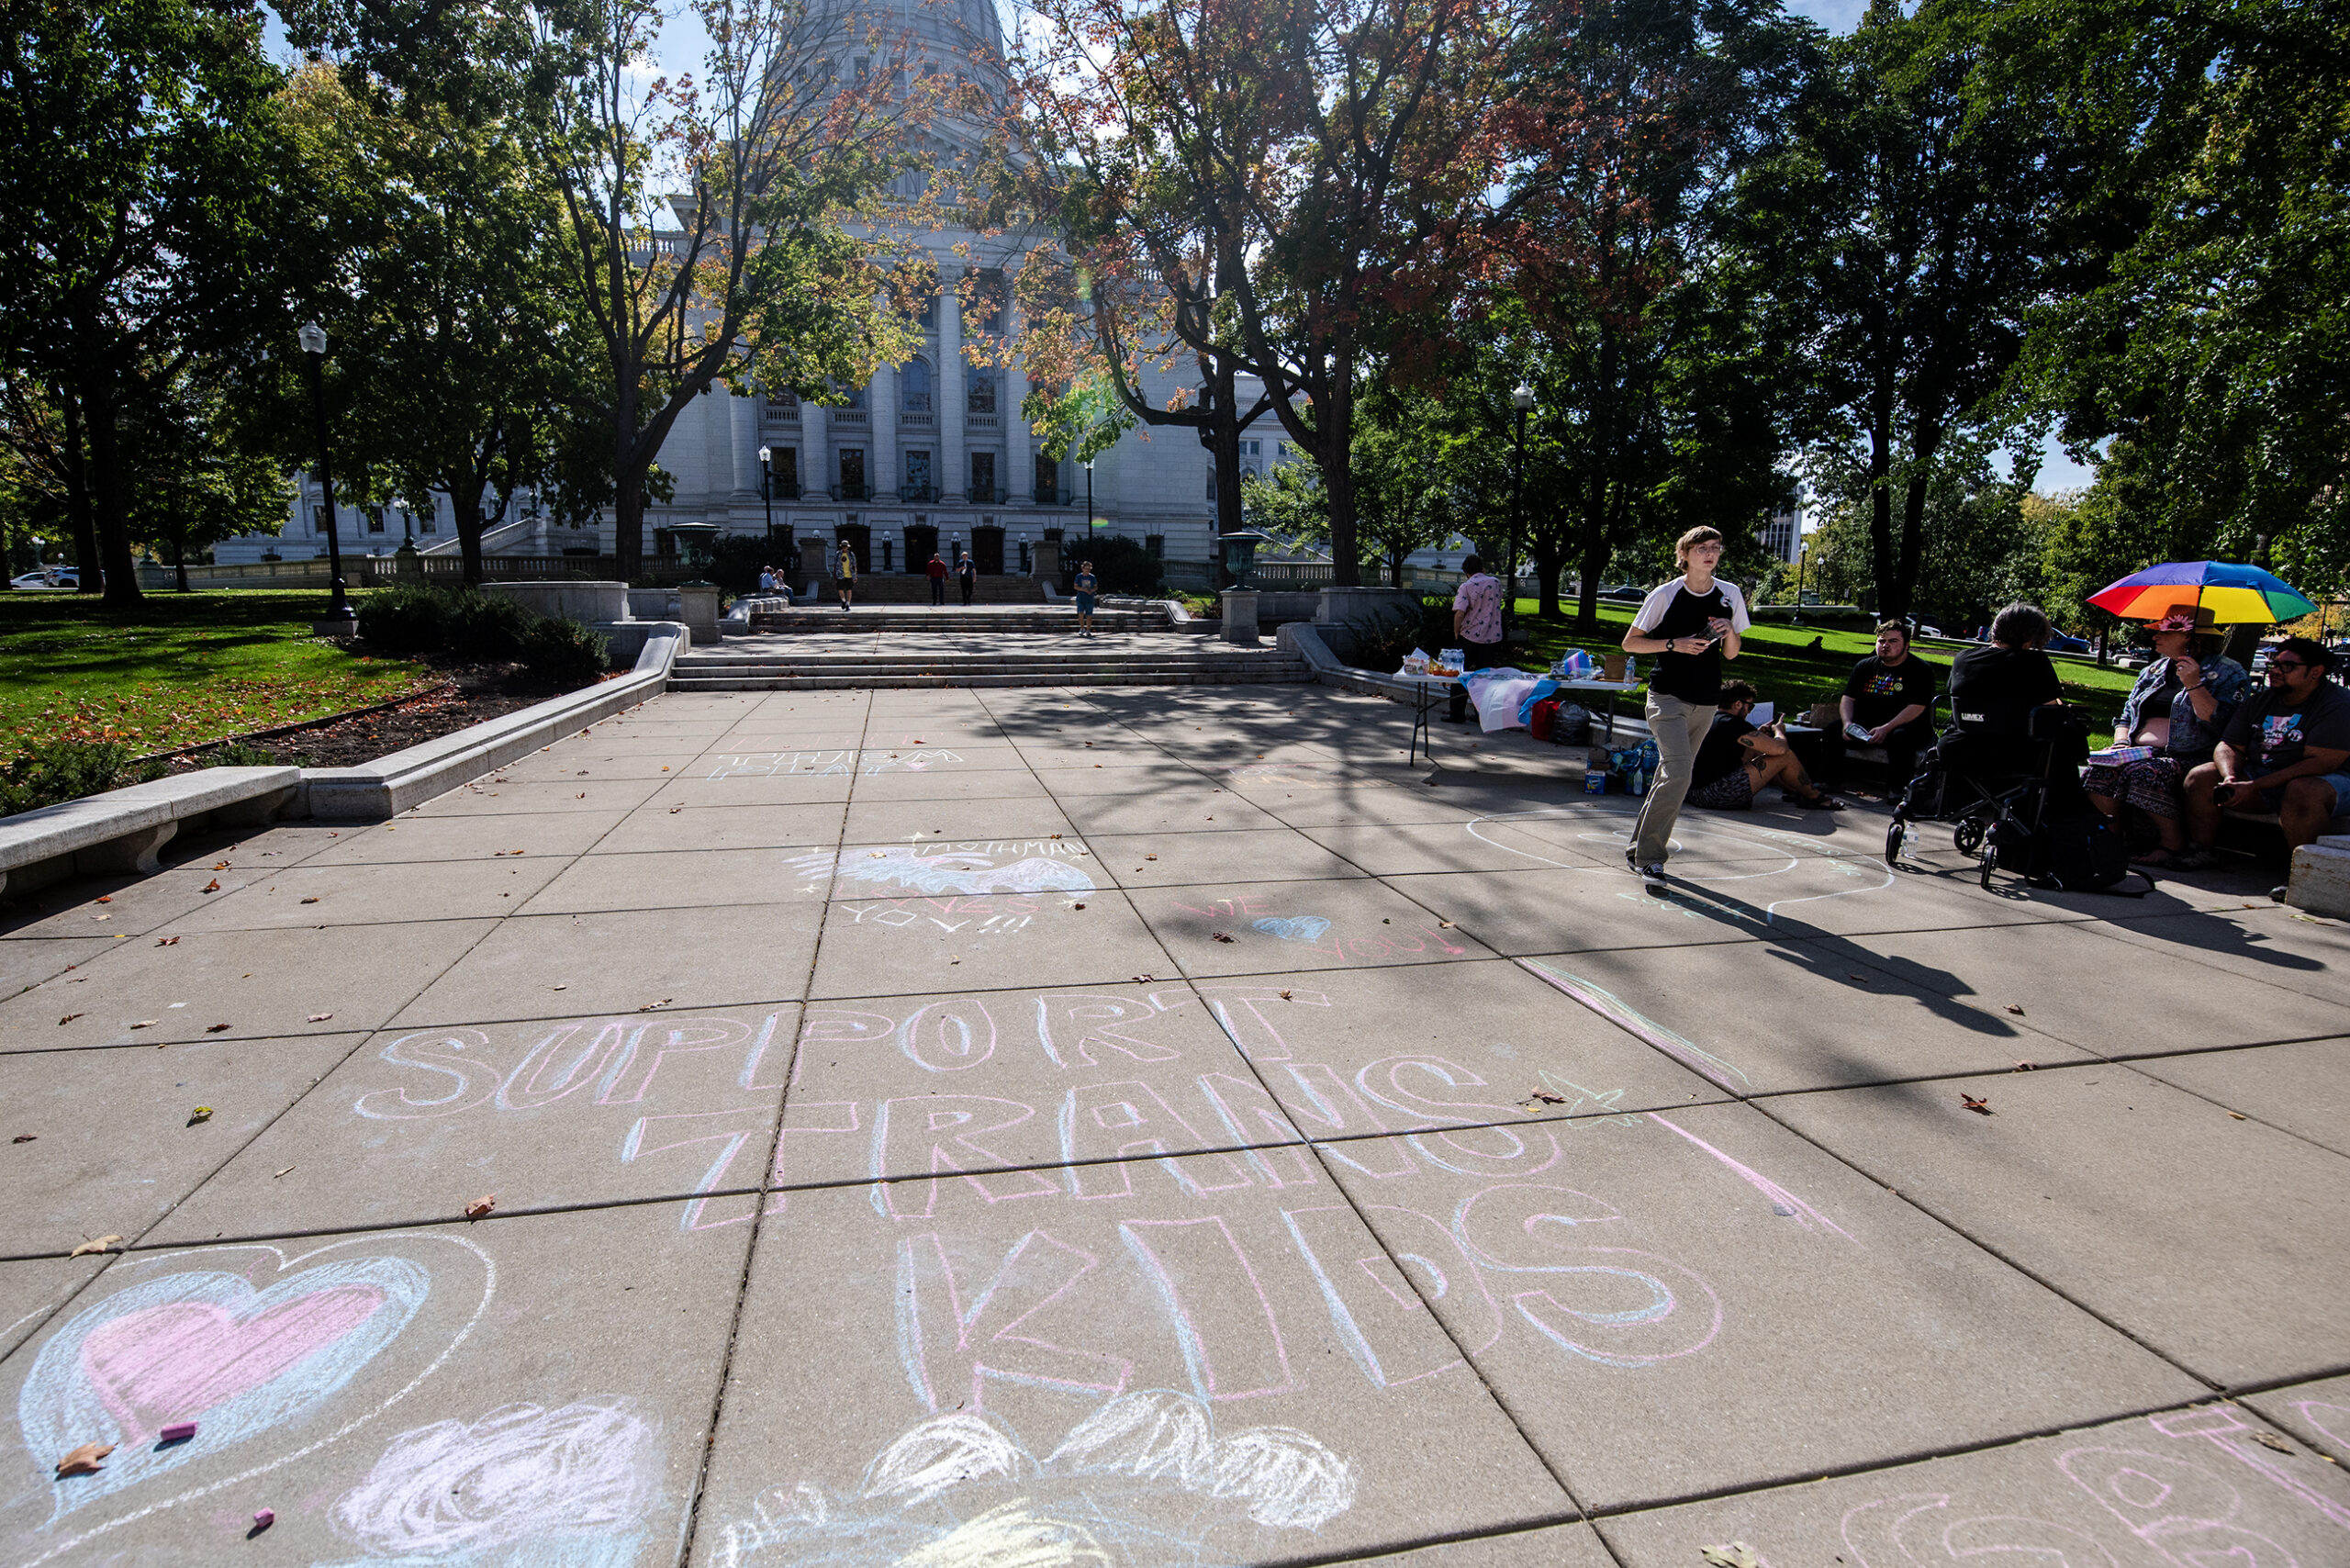 Sidewalk chalk art reads 